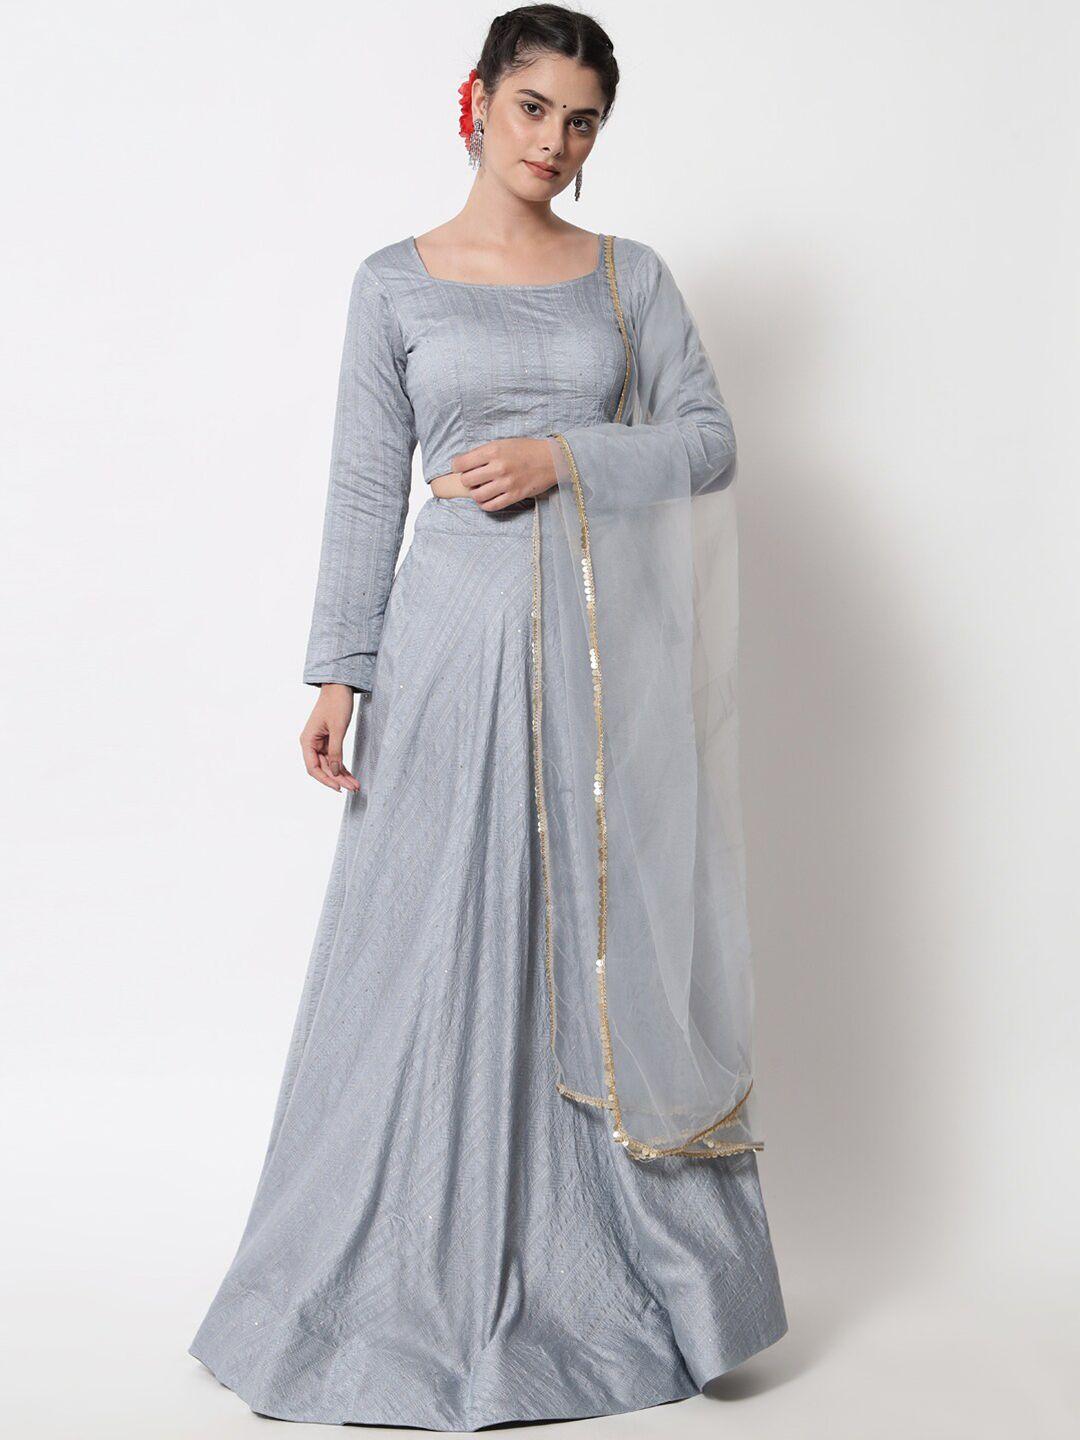 divastri embellished semi-stitched lehenga & unstitched blouse with dupatta